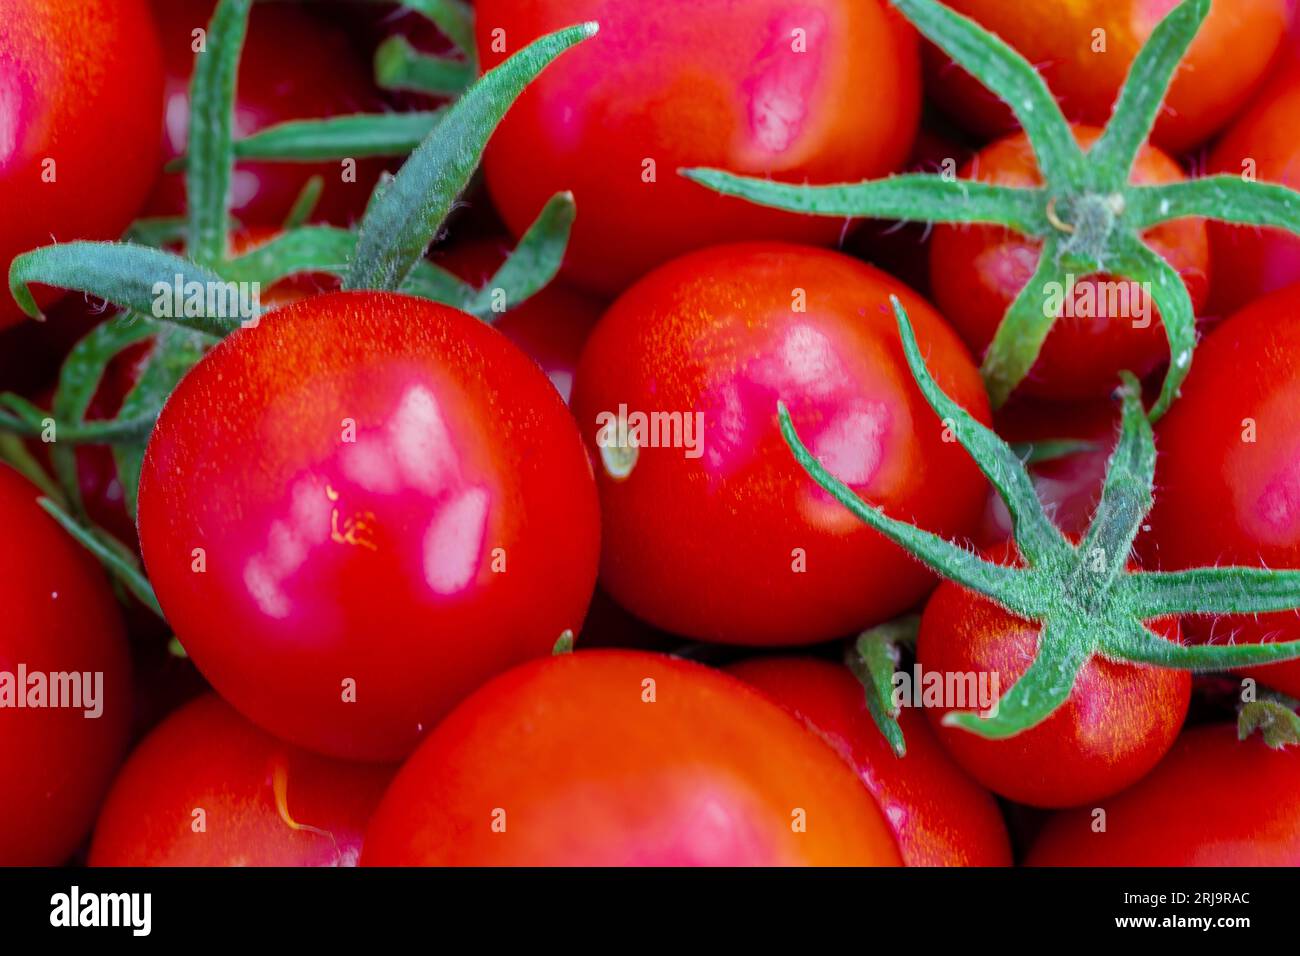 Reife rote Tomaten mit Schnittwegen. Tomaten-Hintergrund Stockfoto